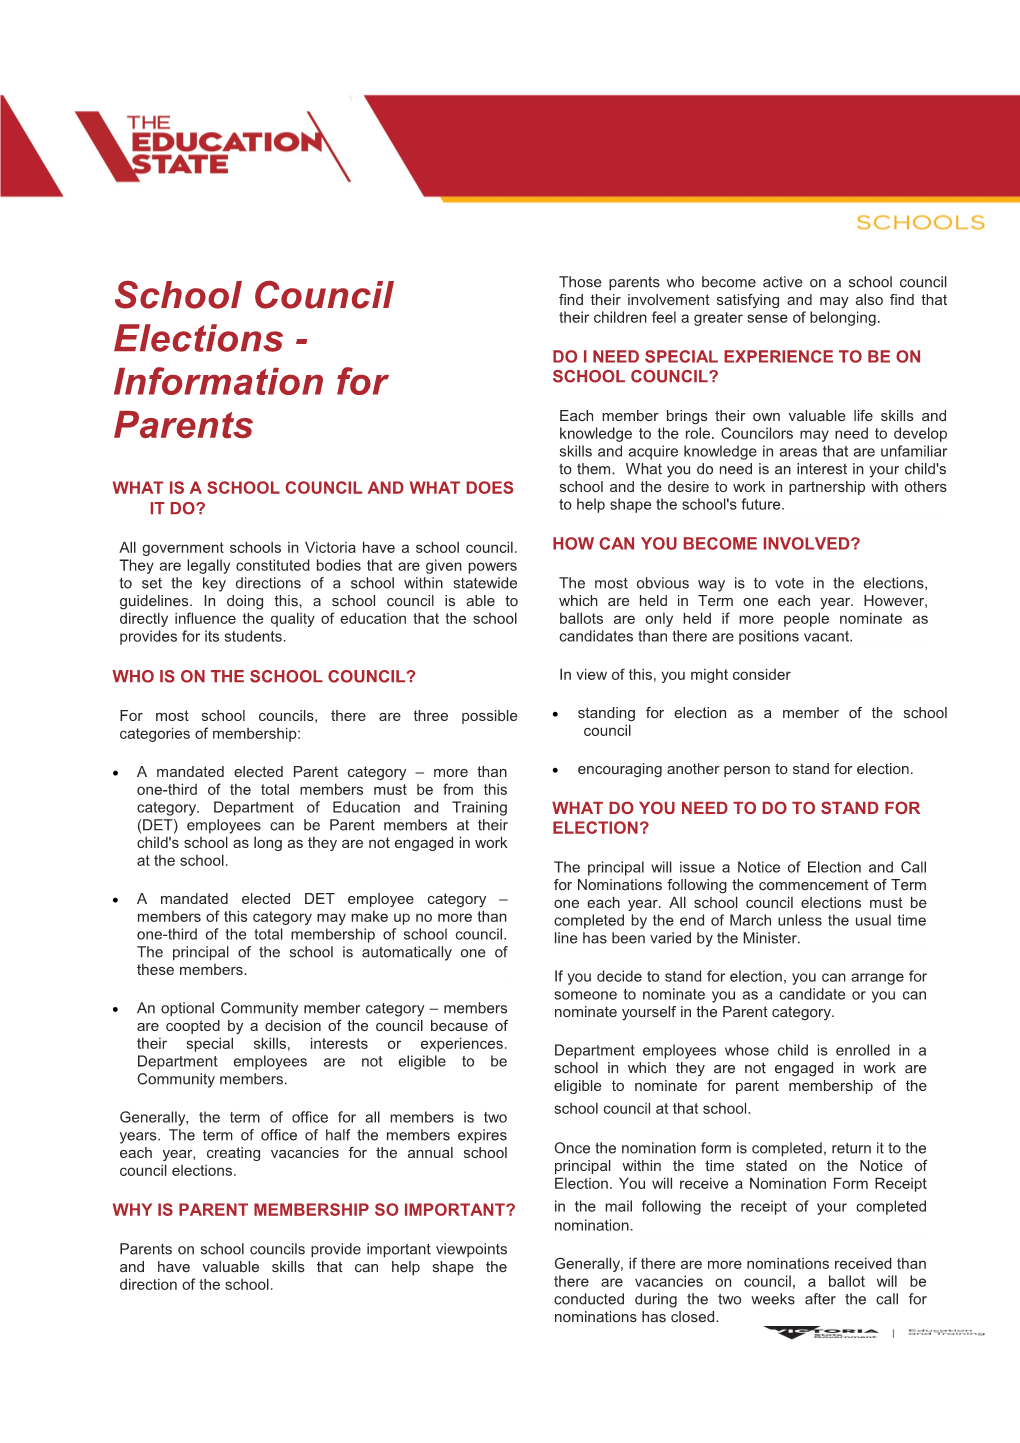 School Council Elections - Information for Parents